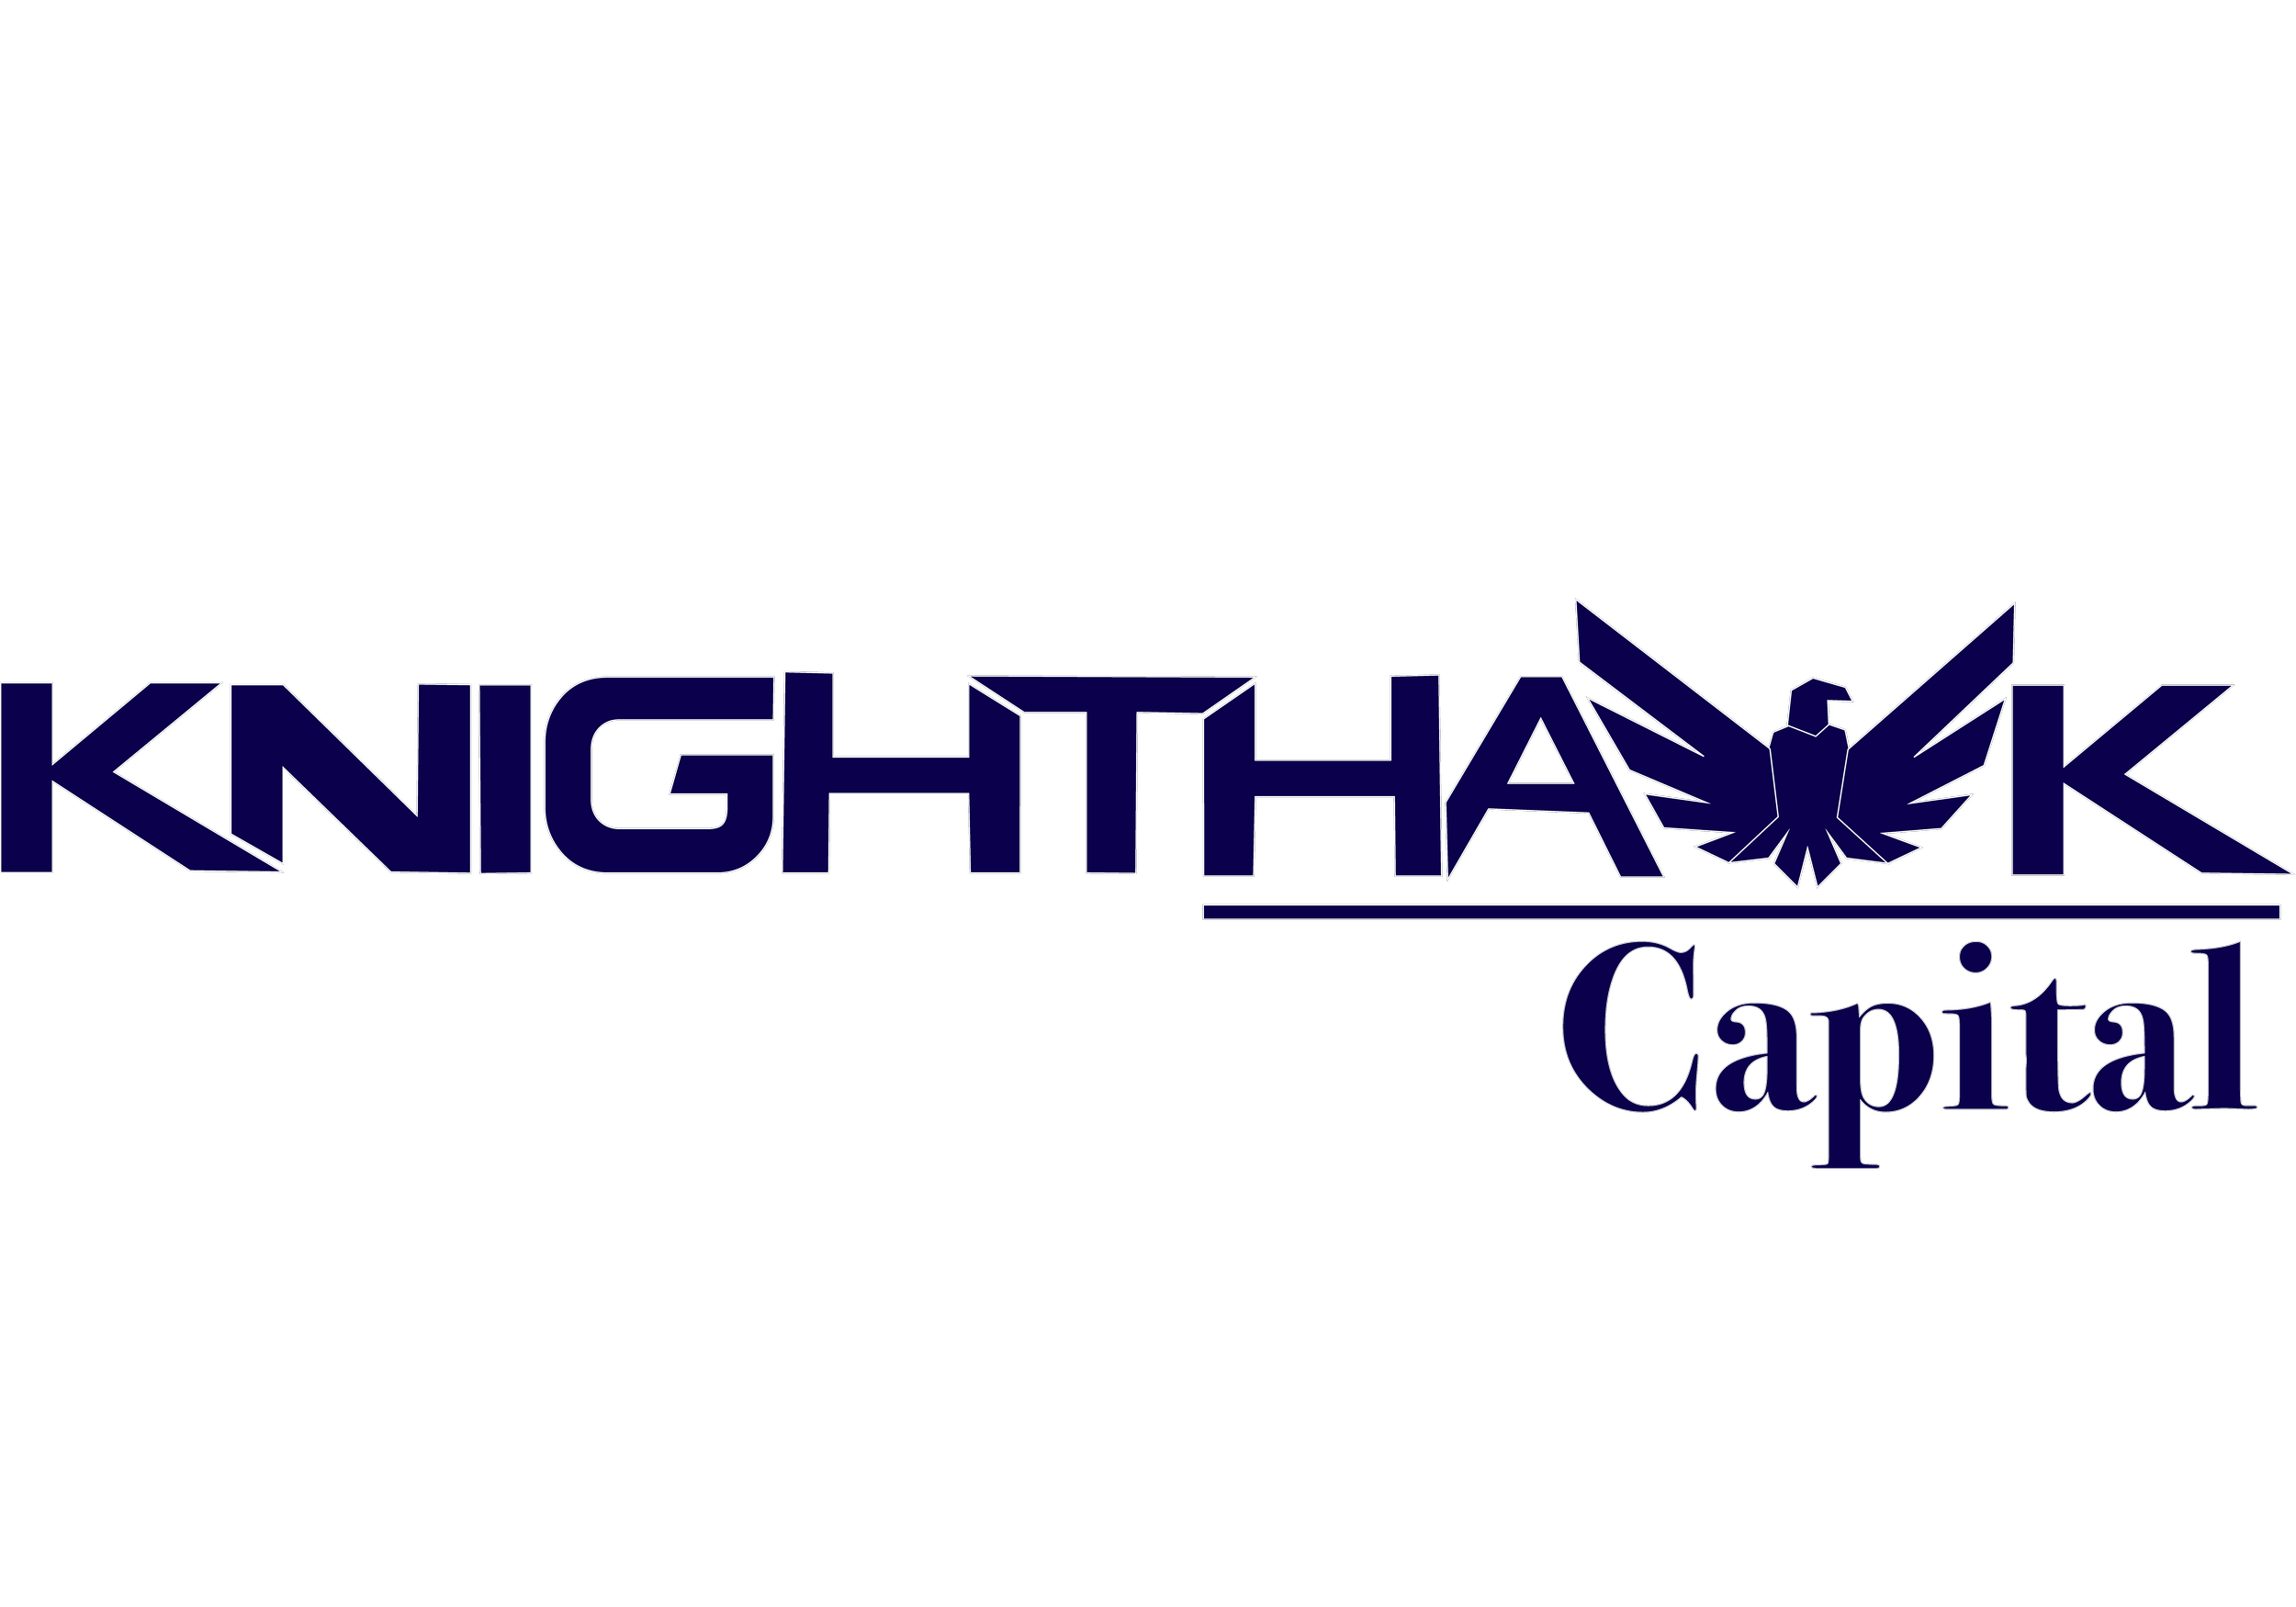 Knighthawk v1.png